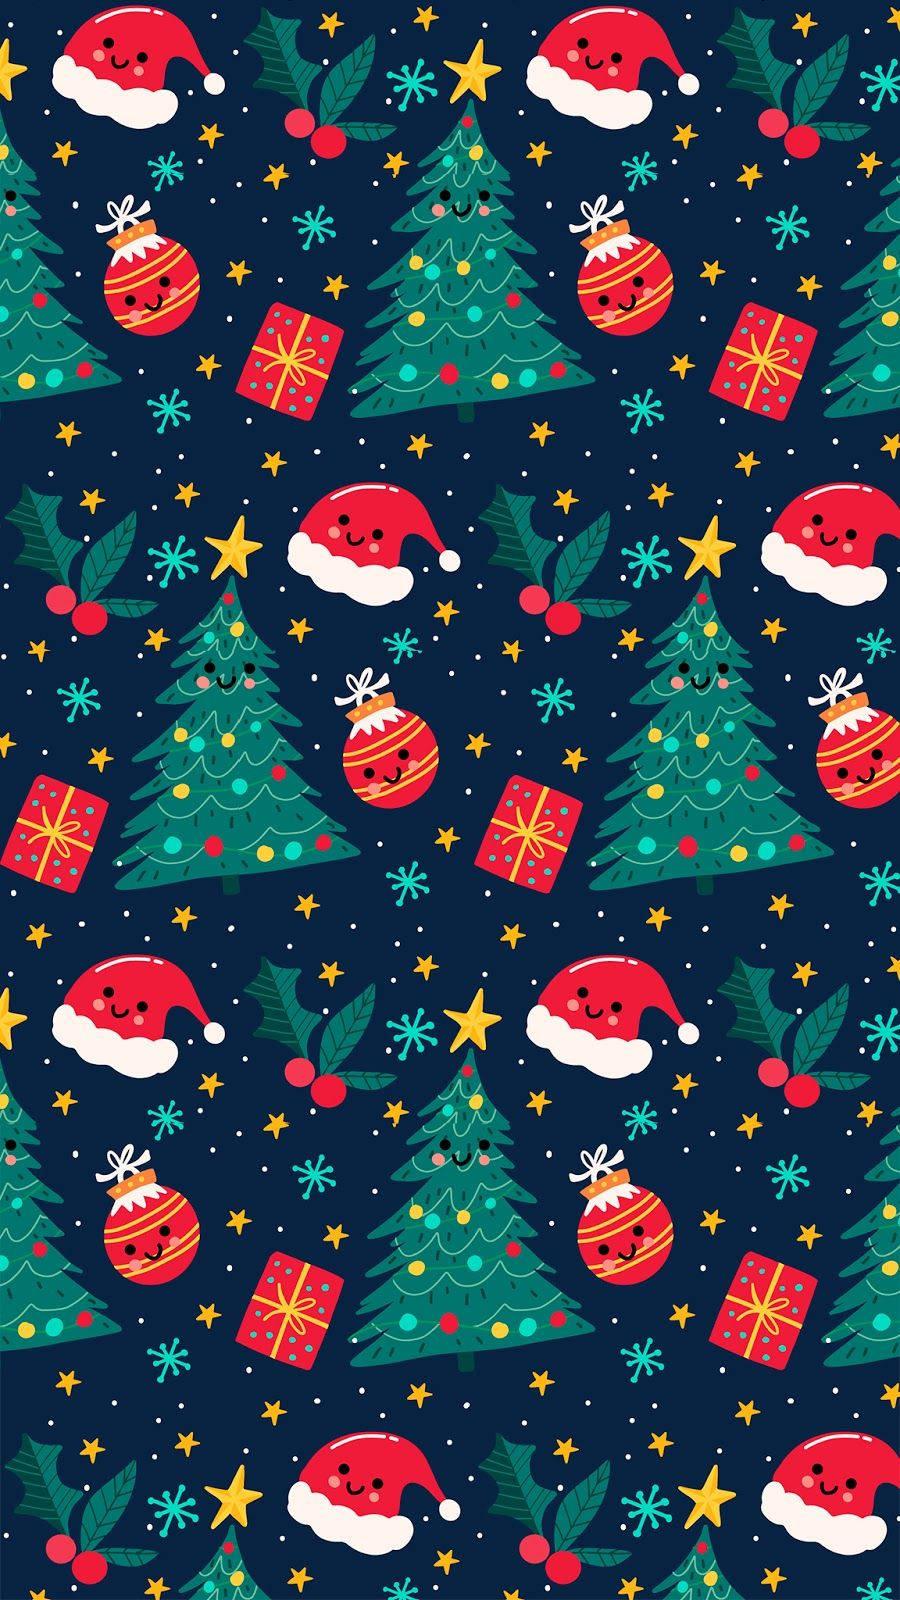 Black Christmas Tree Wallpapers - Top Free Black Christmas Tree ...